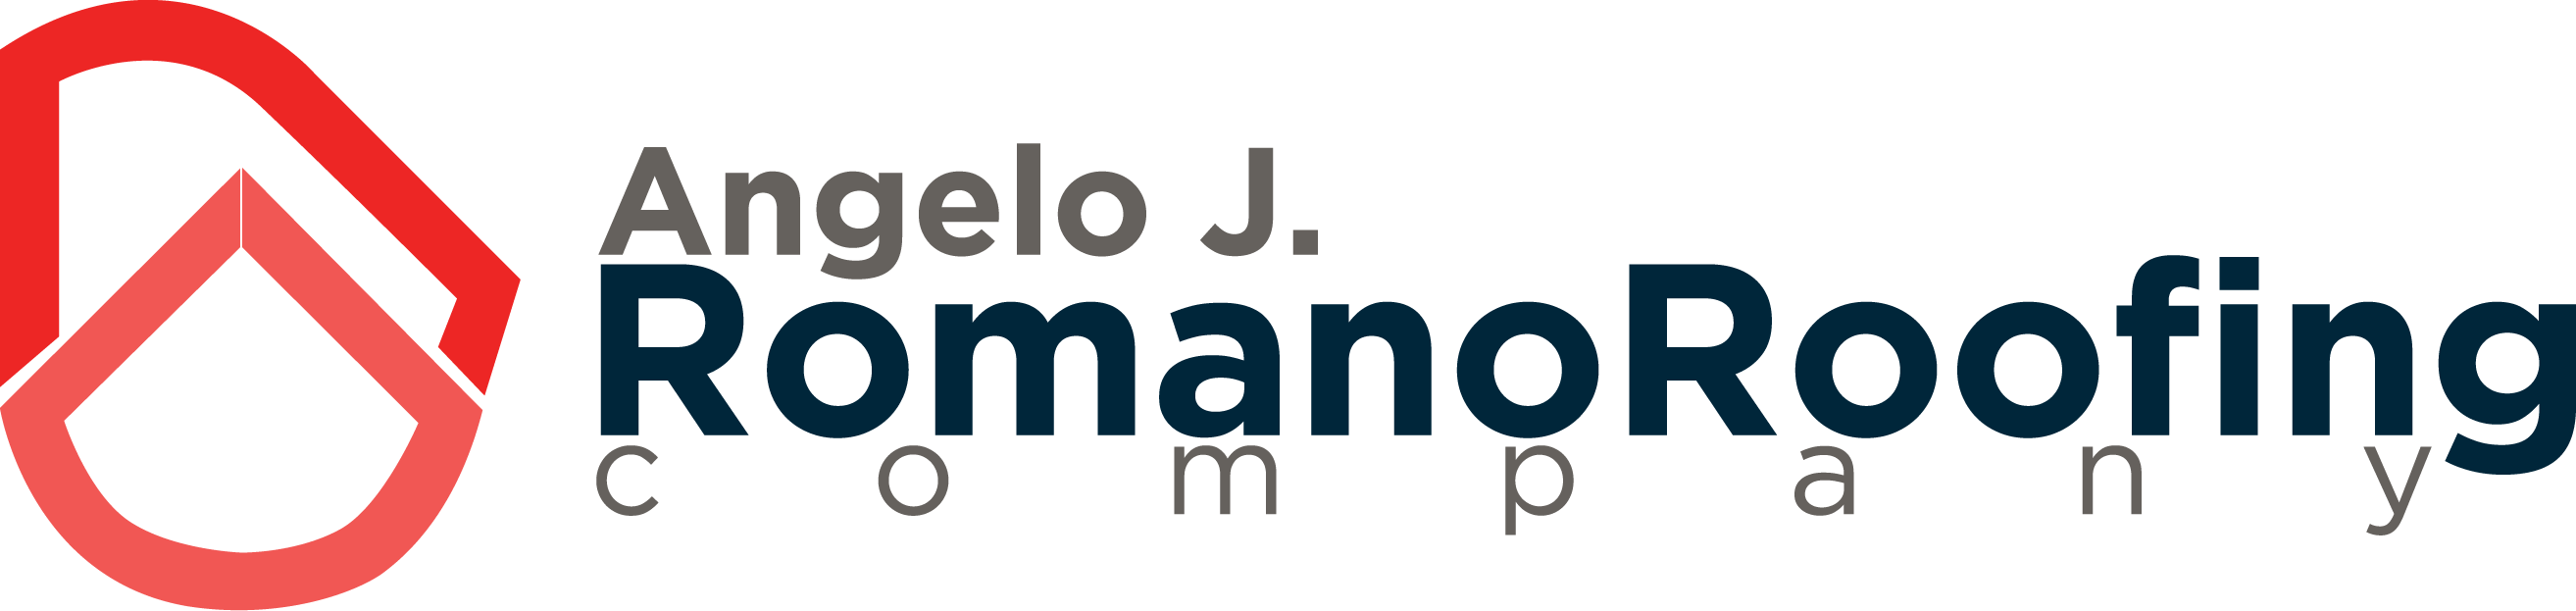 Angelo J. Romano Roofing Co. Logo